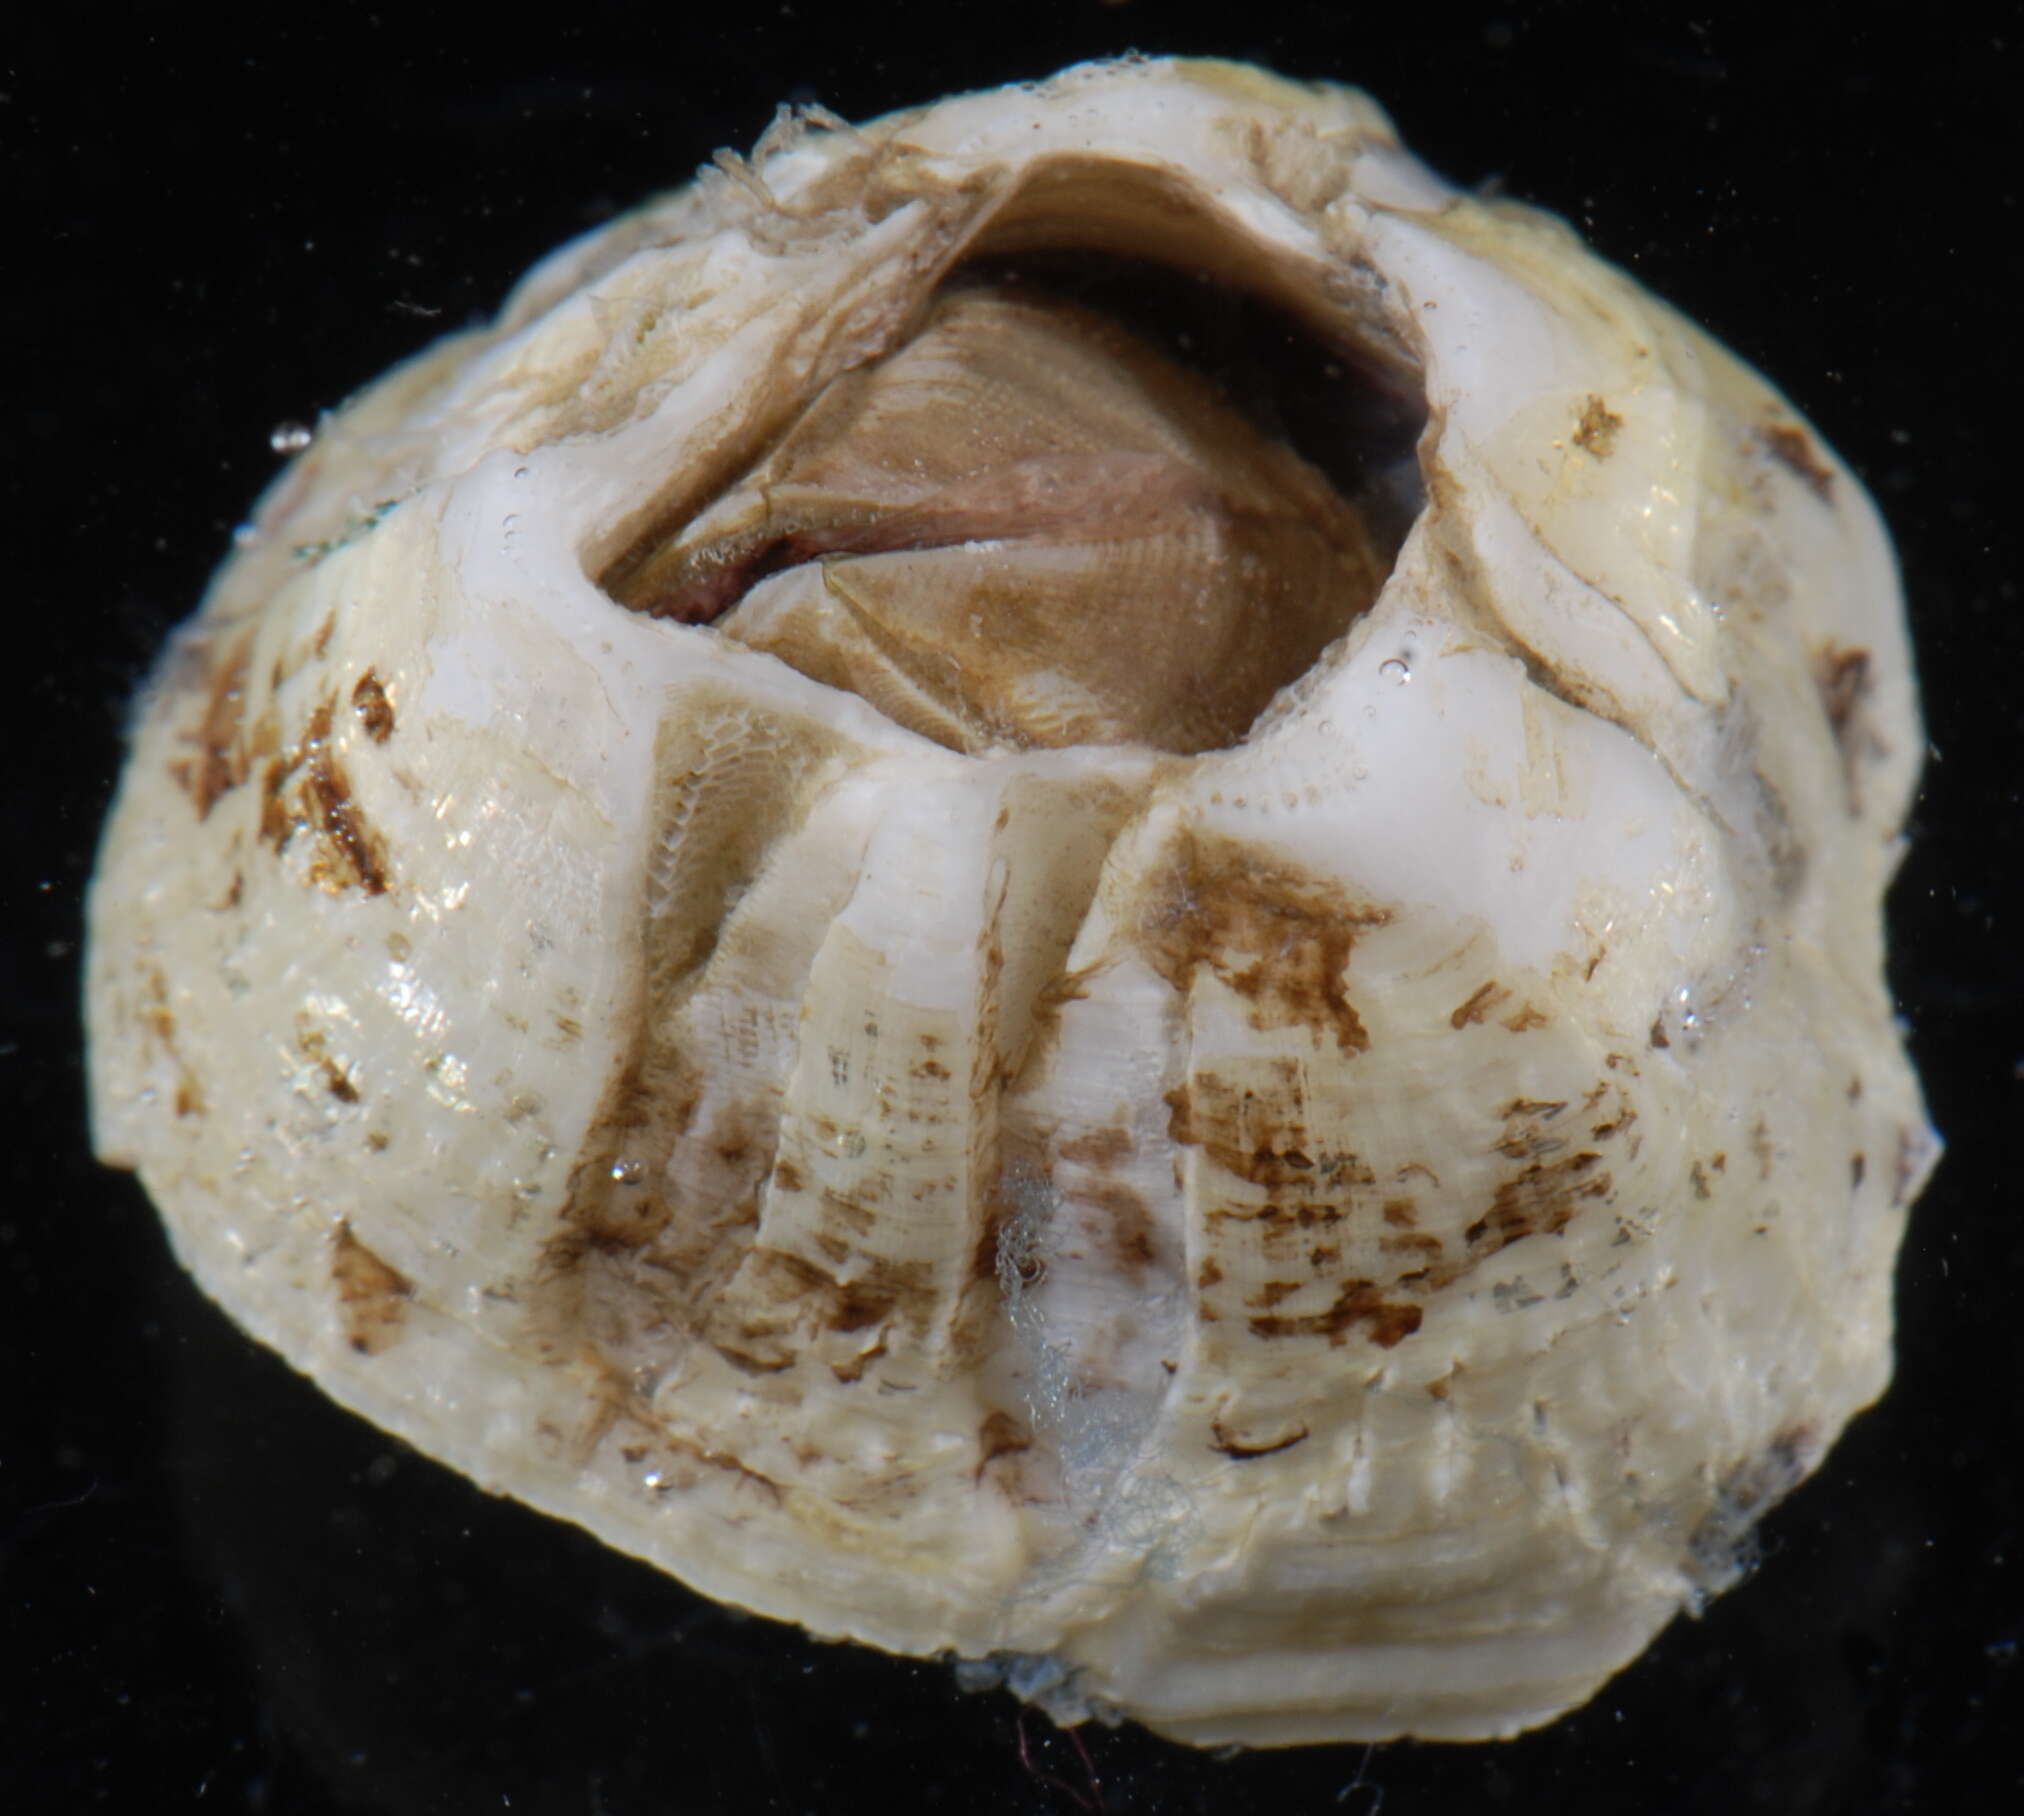 Image of Ivory barnacle